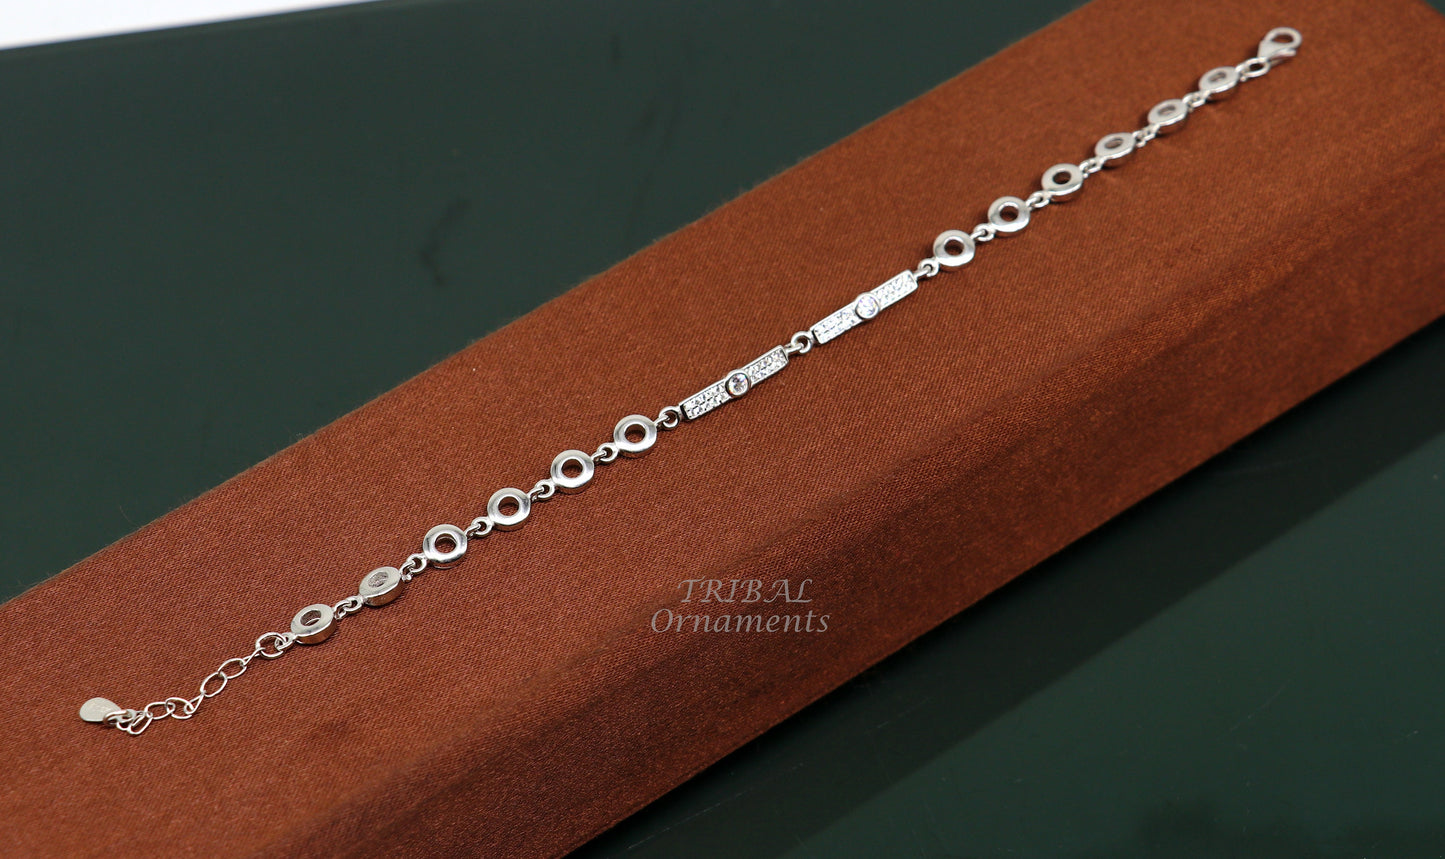 925 sterling silver handmade link chain Bracelet for girl's, Dainty Silver Bracelet, Chain Bracelet, Minimal Jewelry, Gift For Women sbr382 - TRIBAL ORNAMENTS